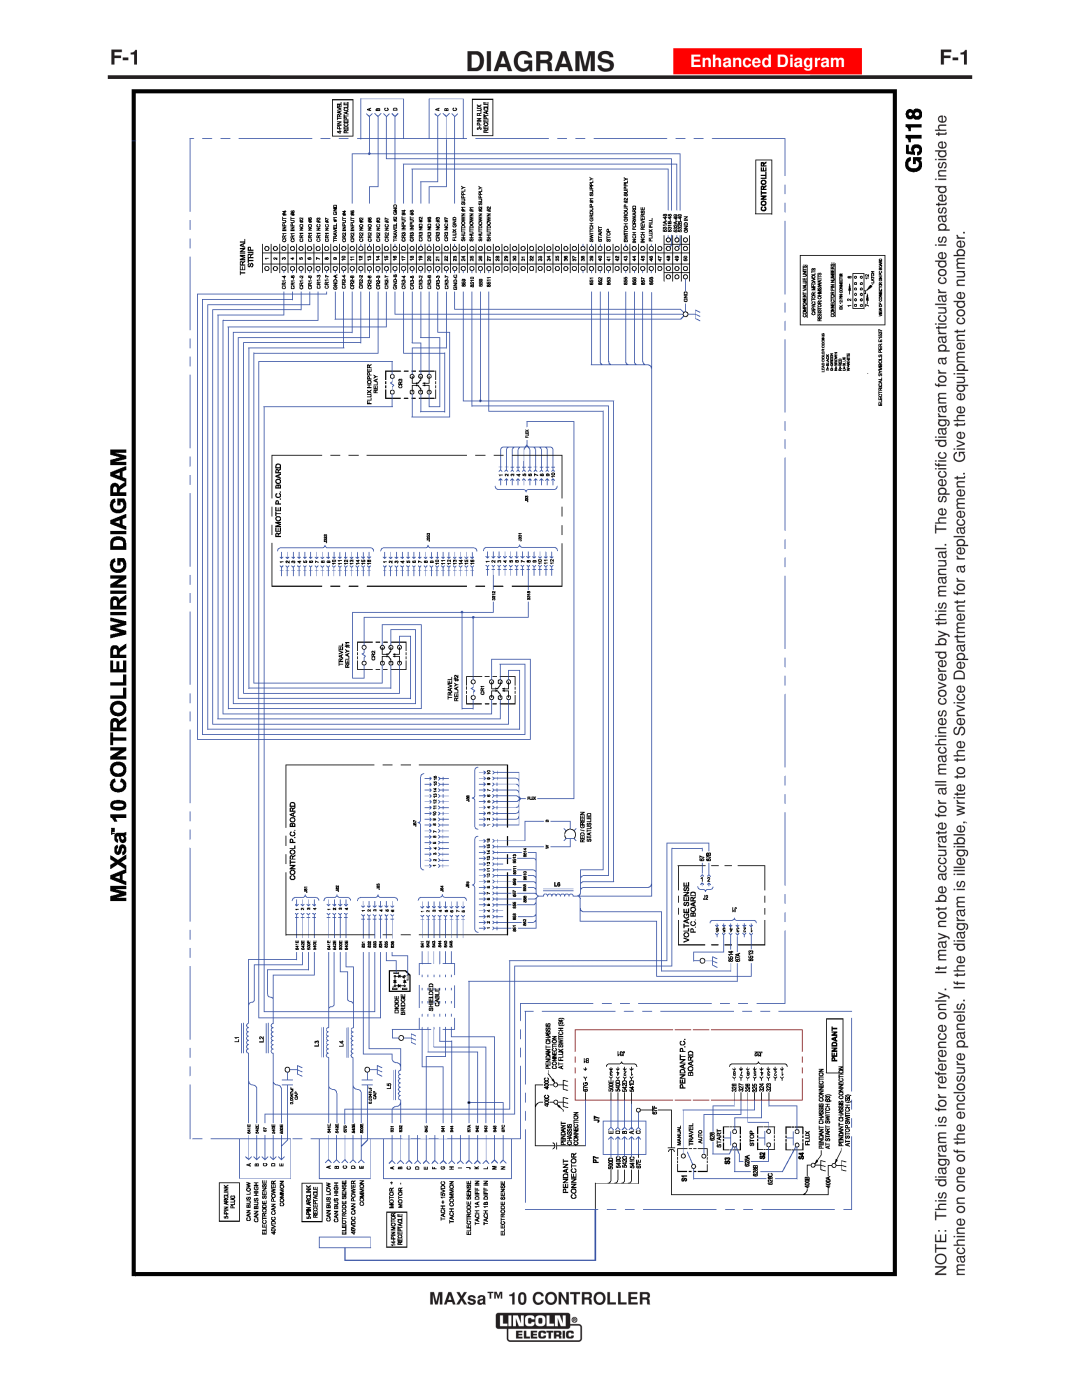 Lincoln Electric IM10023 manual Diagrams, Enhanced Diagram 